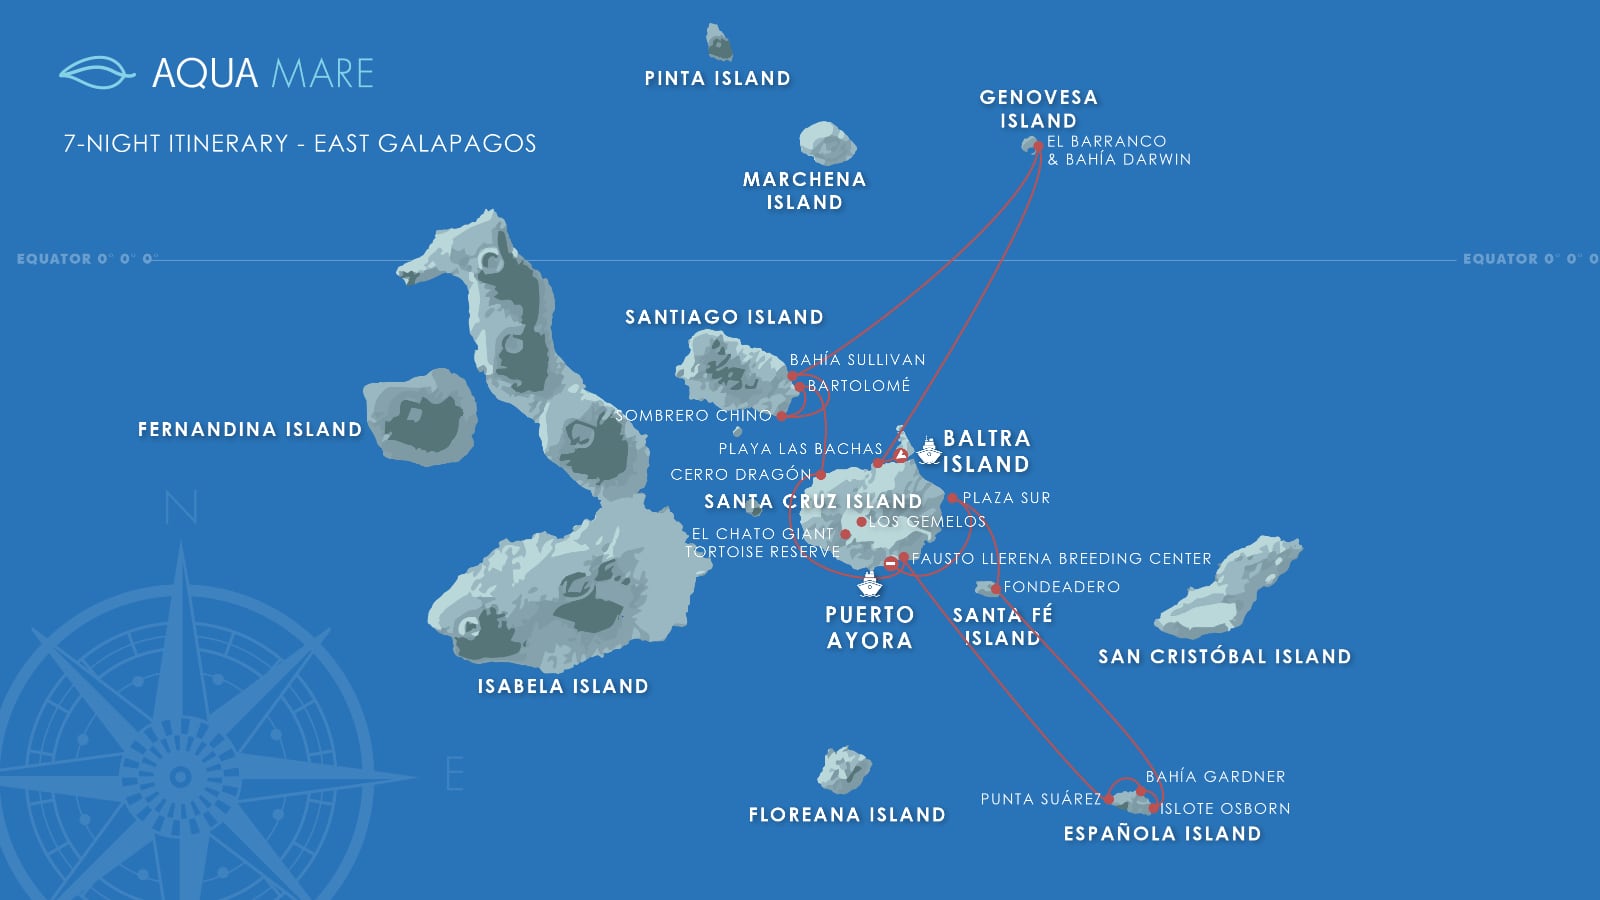 Aqua Mare's East Galápagos Islands route map